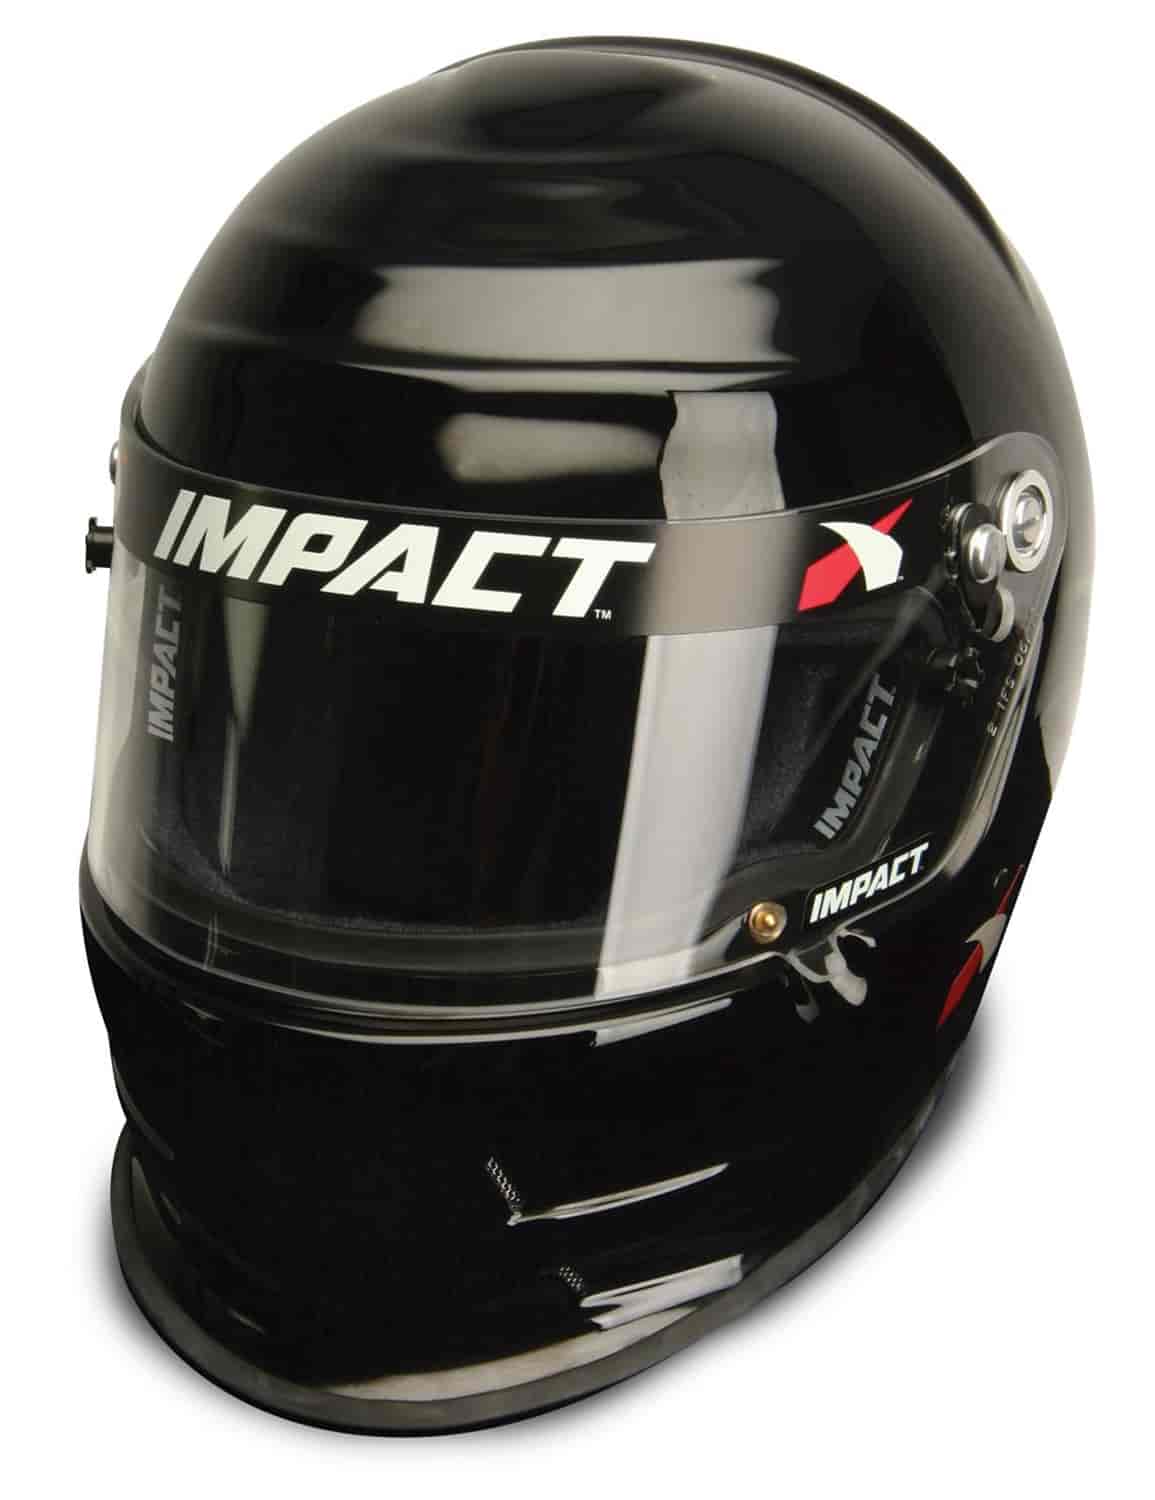 Helmet - Vapor 2014 SNELL15 XXL Black